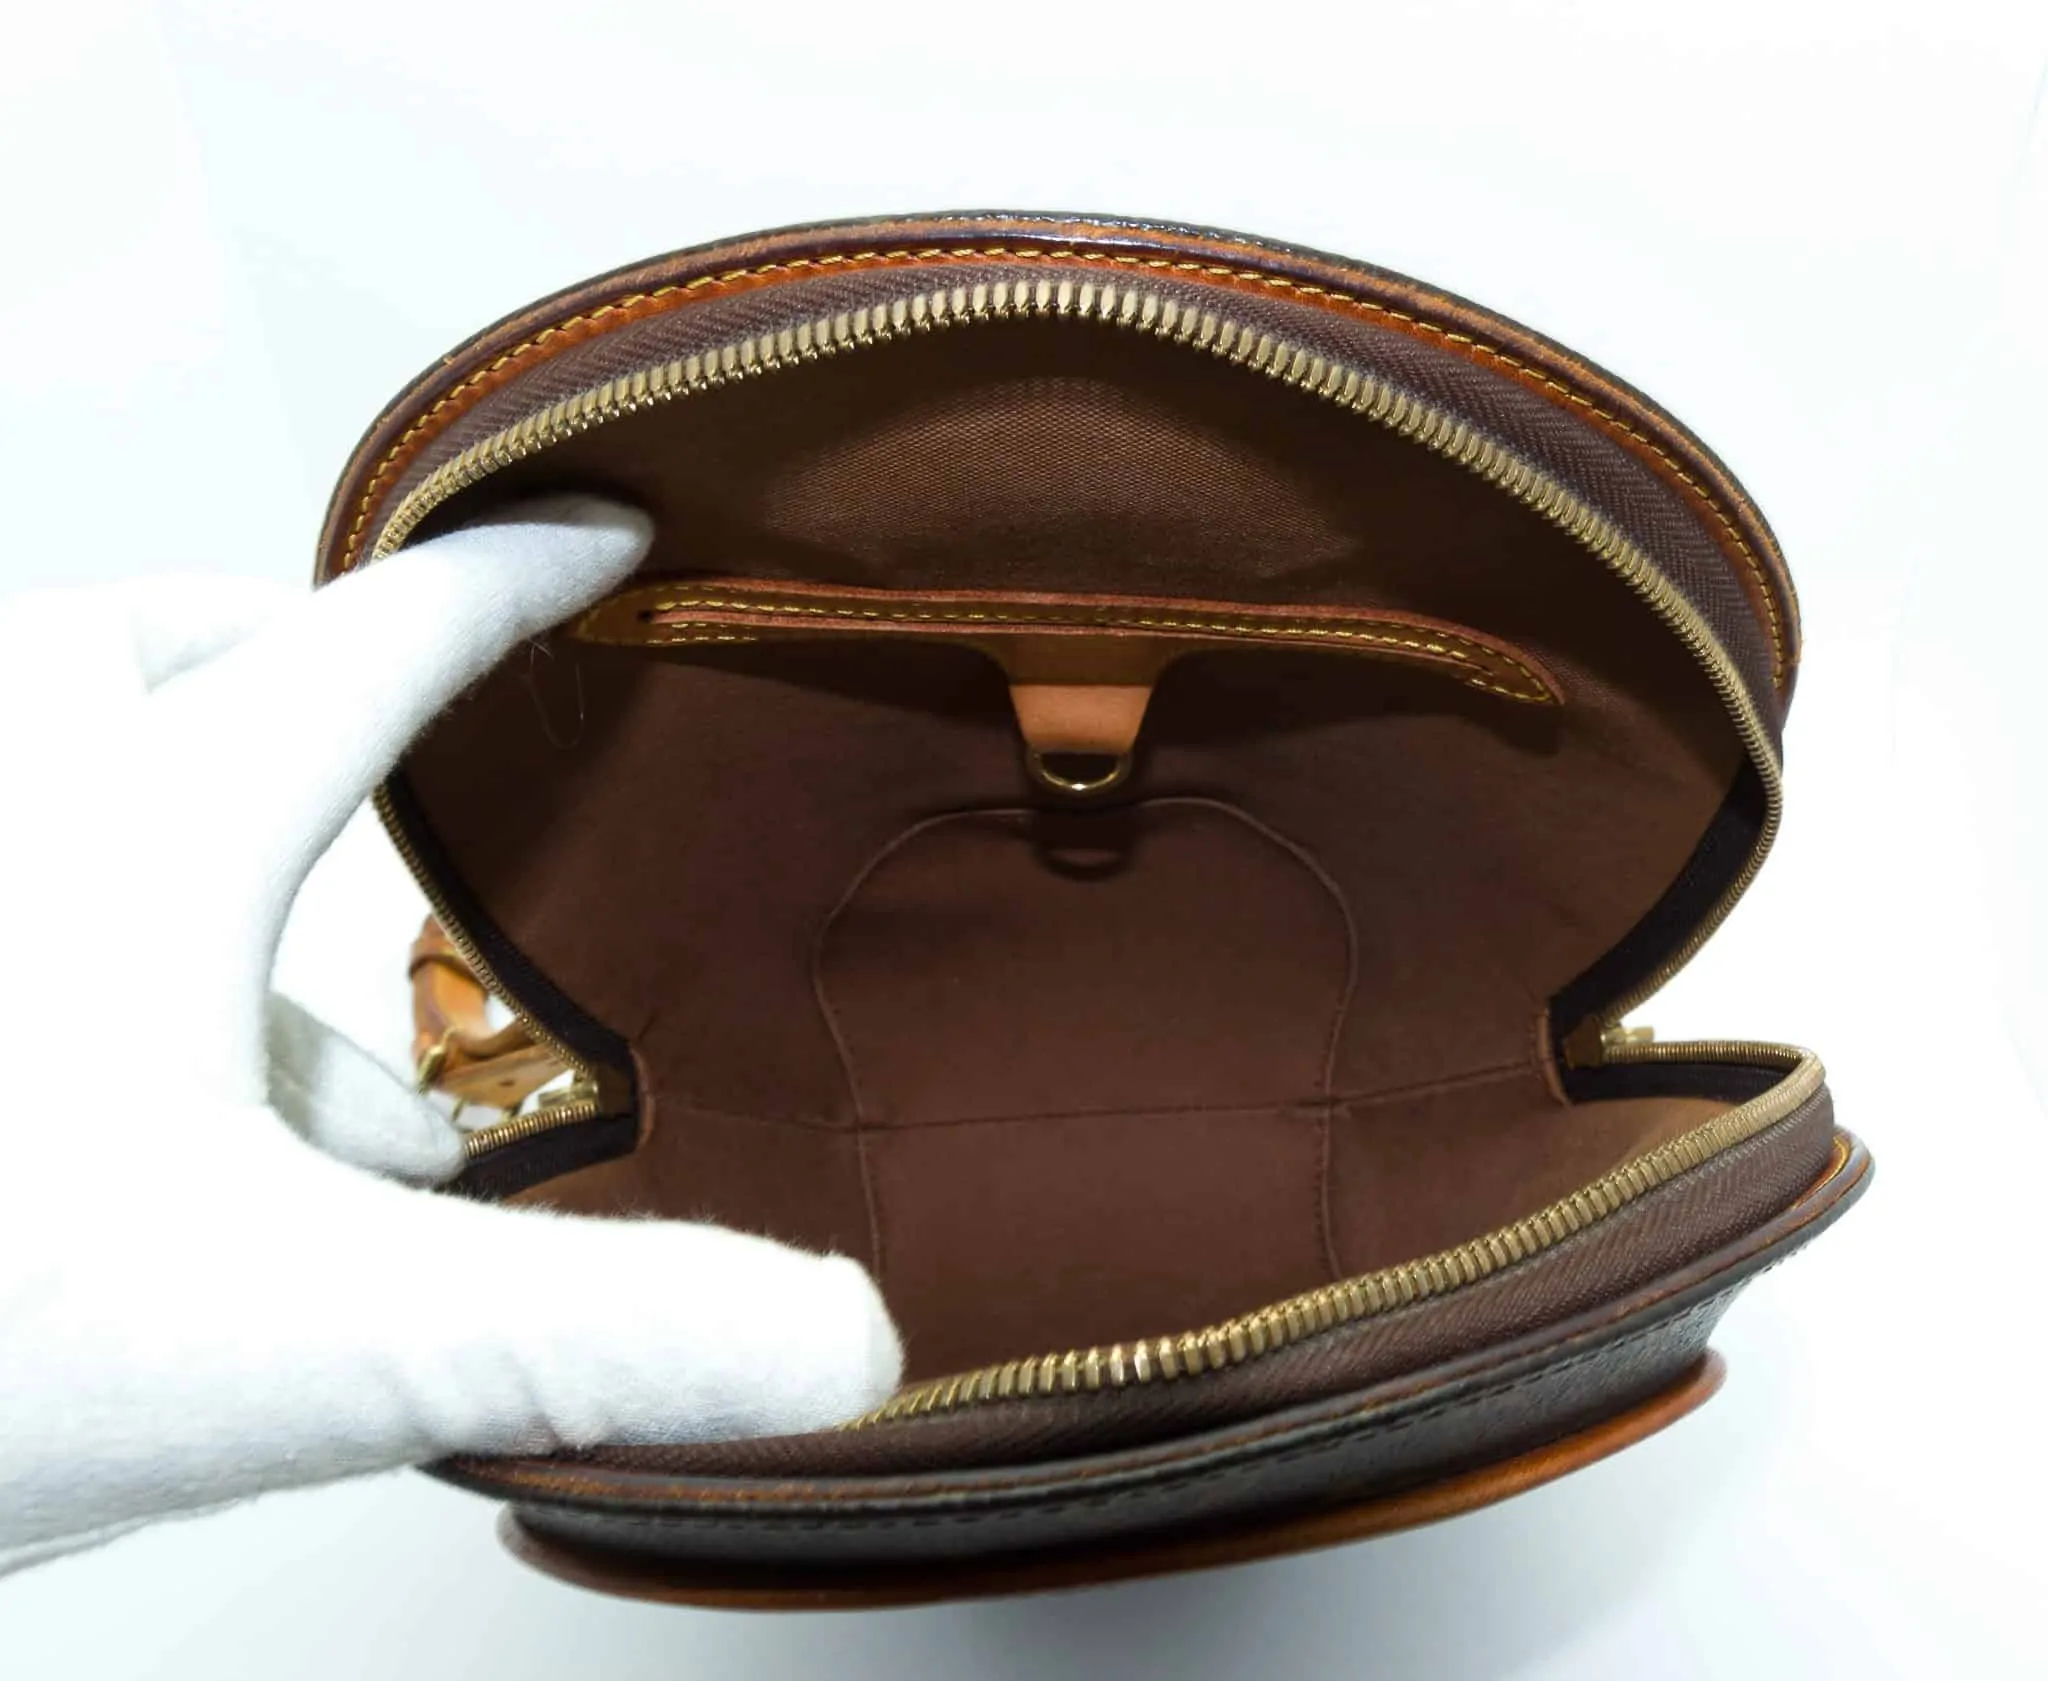 Sold at Auction: Vintage Louis Vuitton 'Ellipse' Backpack